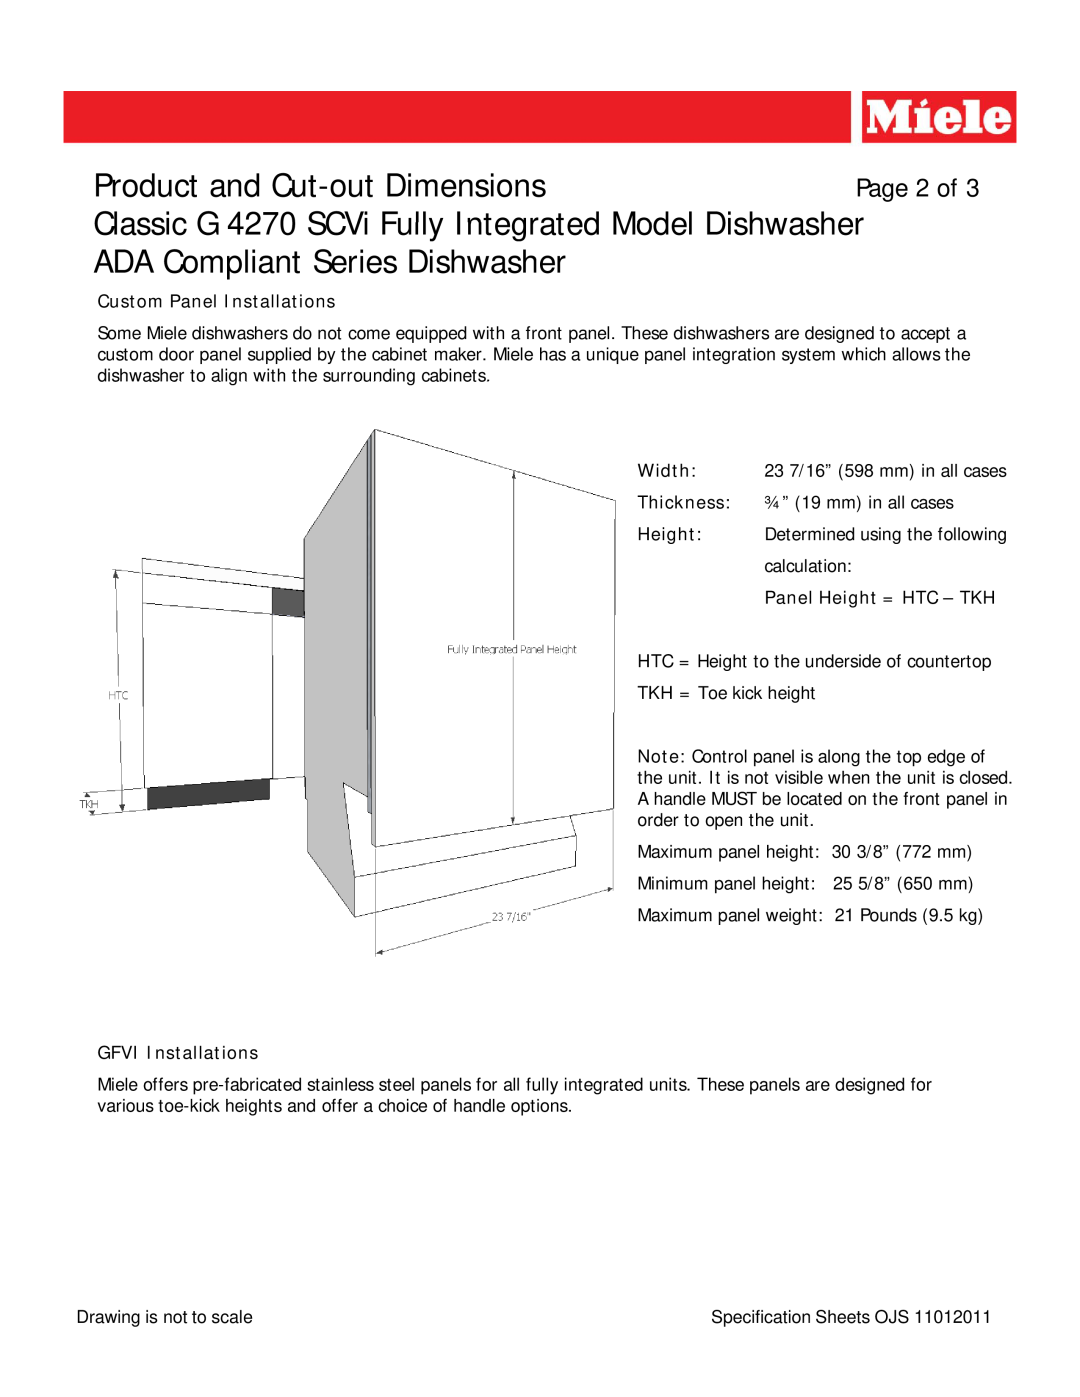 Miele G 4270 SCVI dimensions ADA Compliant Series Dishwasher, Custom Panel Installations, Panel Height = HTC - TKH 